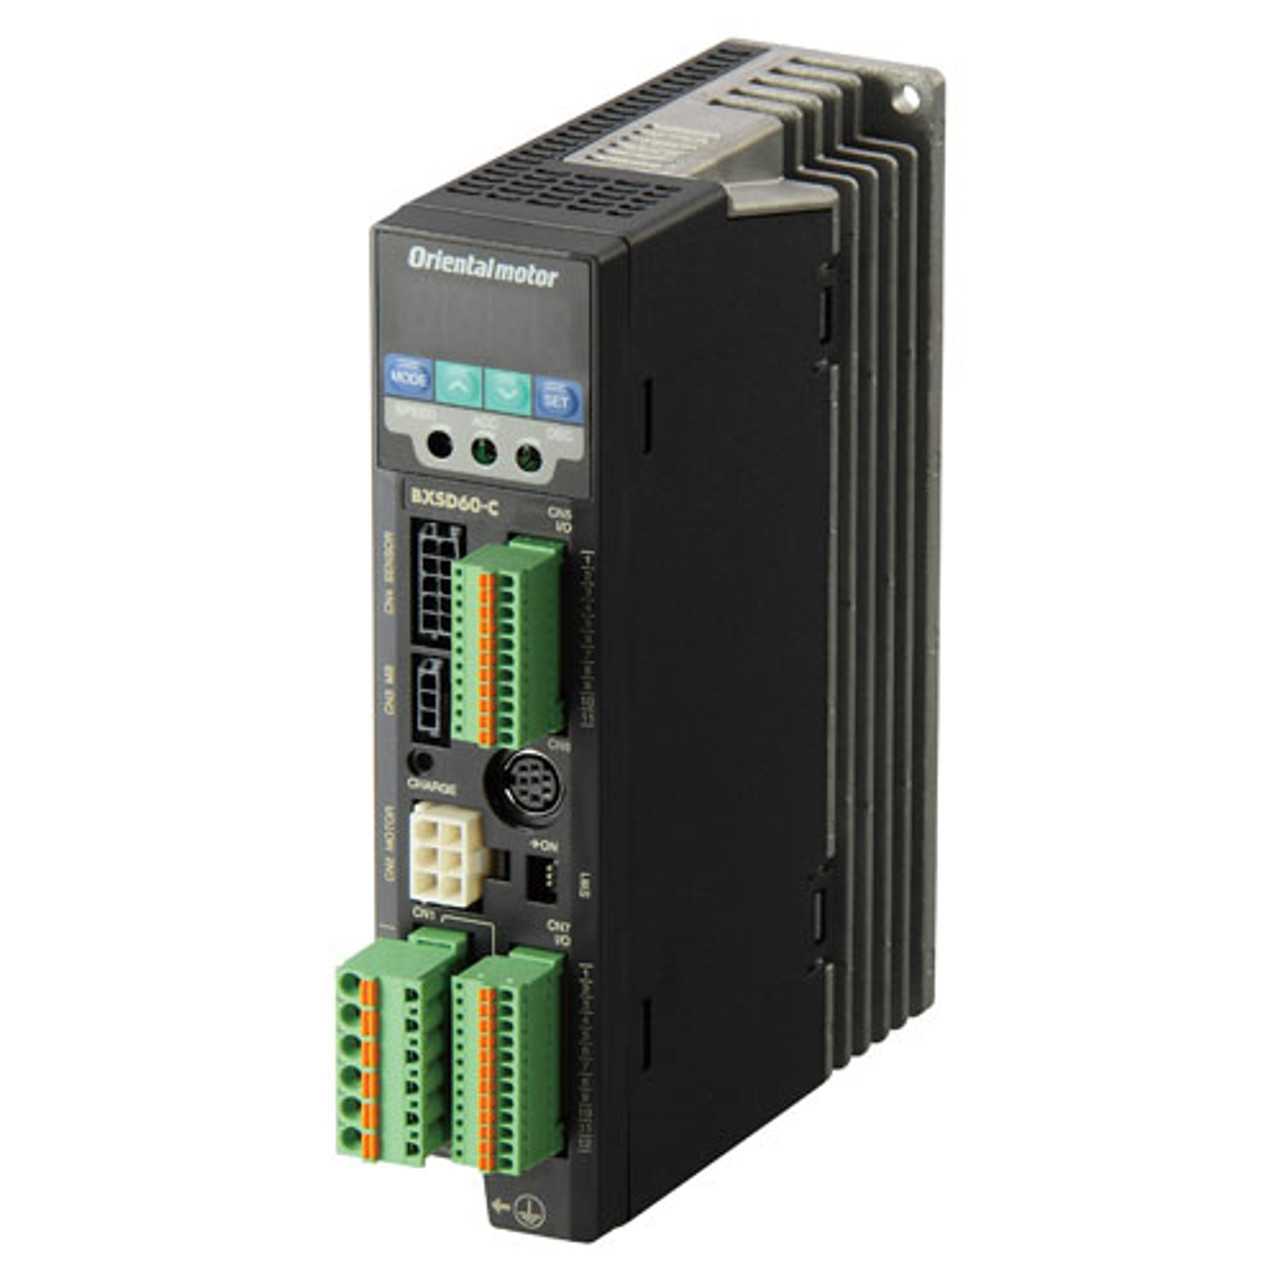 BXSD30-C2 - Product Image